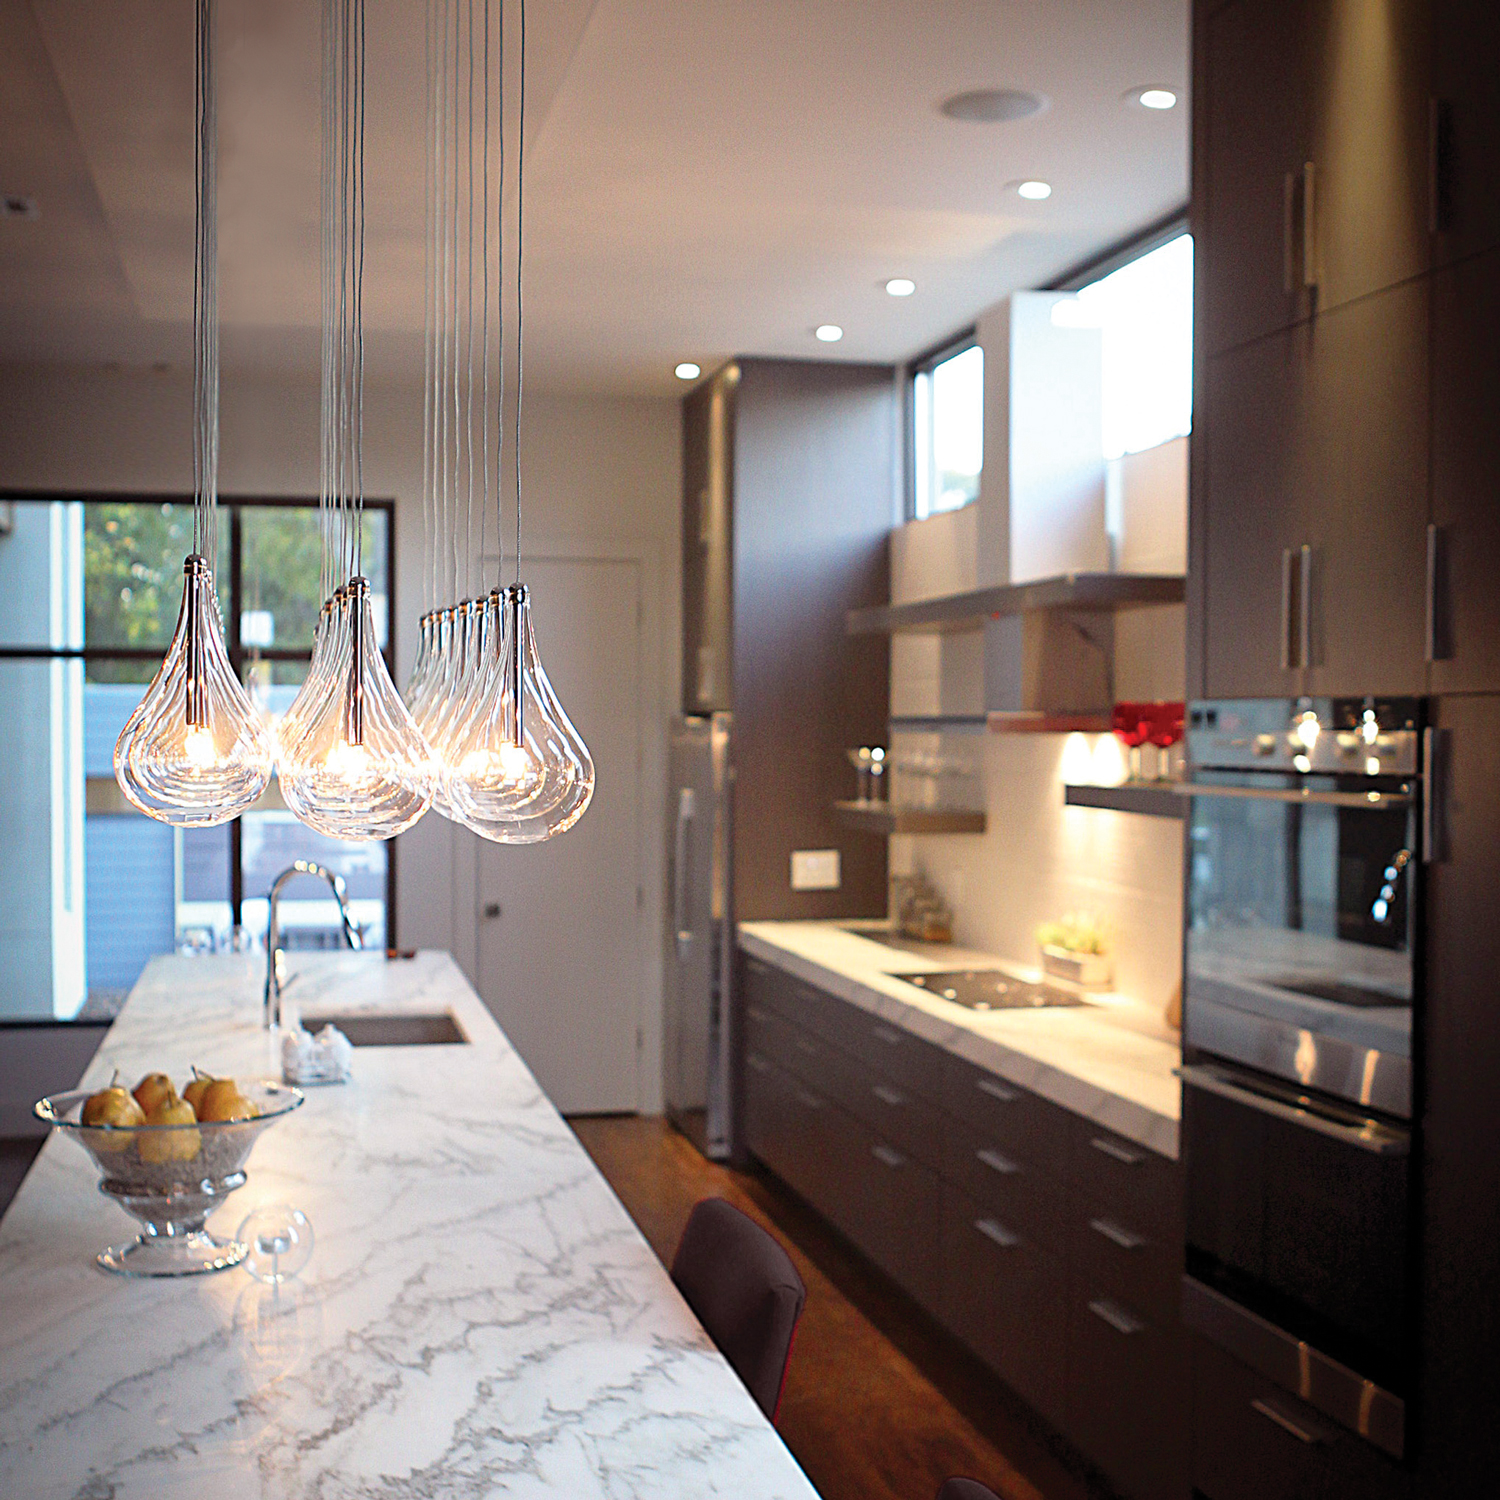 Larmes 24-Light LED Linear Suspension in a modern kitchen.